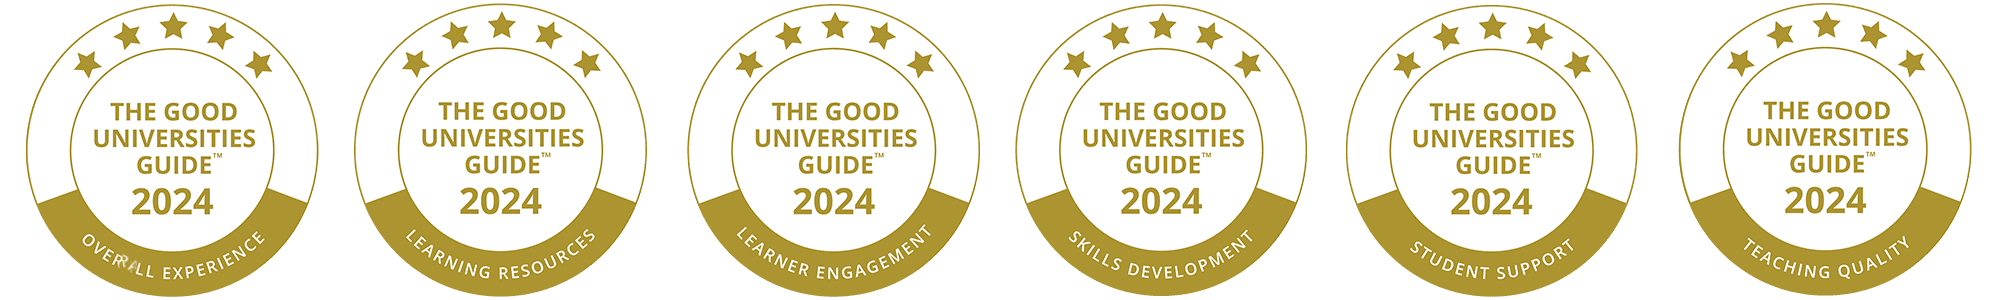 Good Universities Guide 5 star rating disk logos